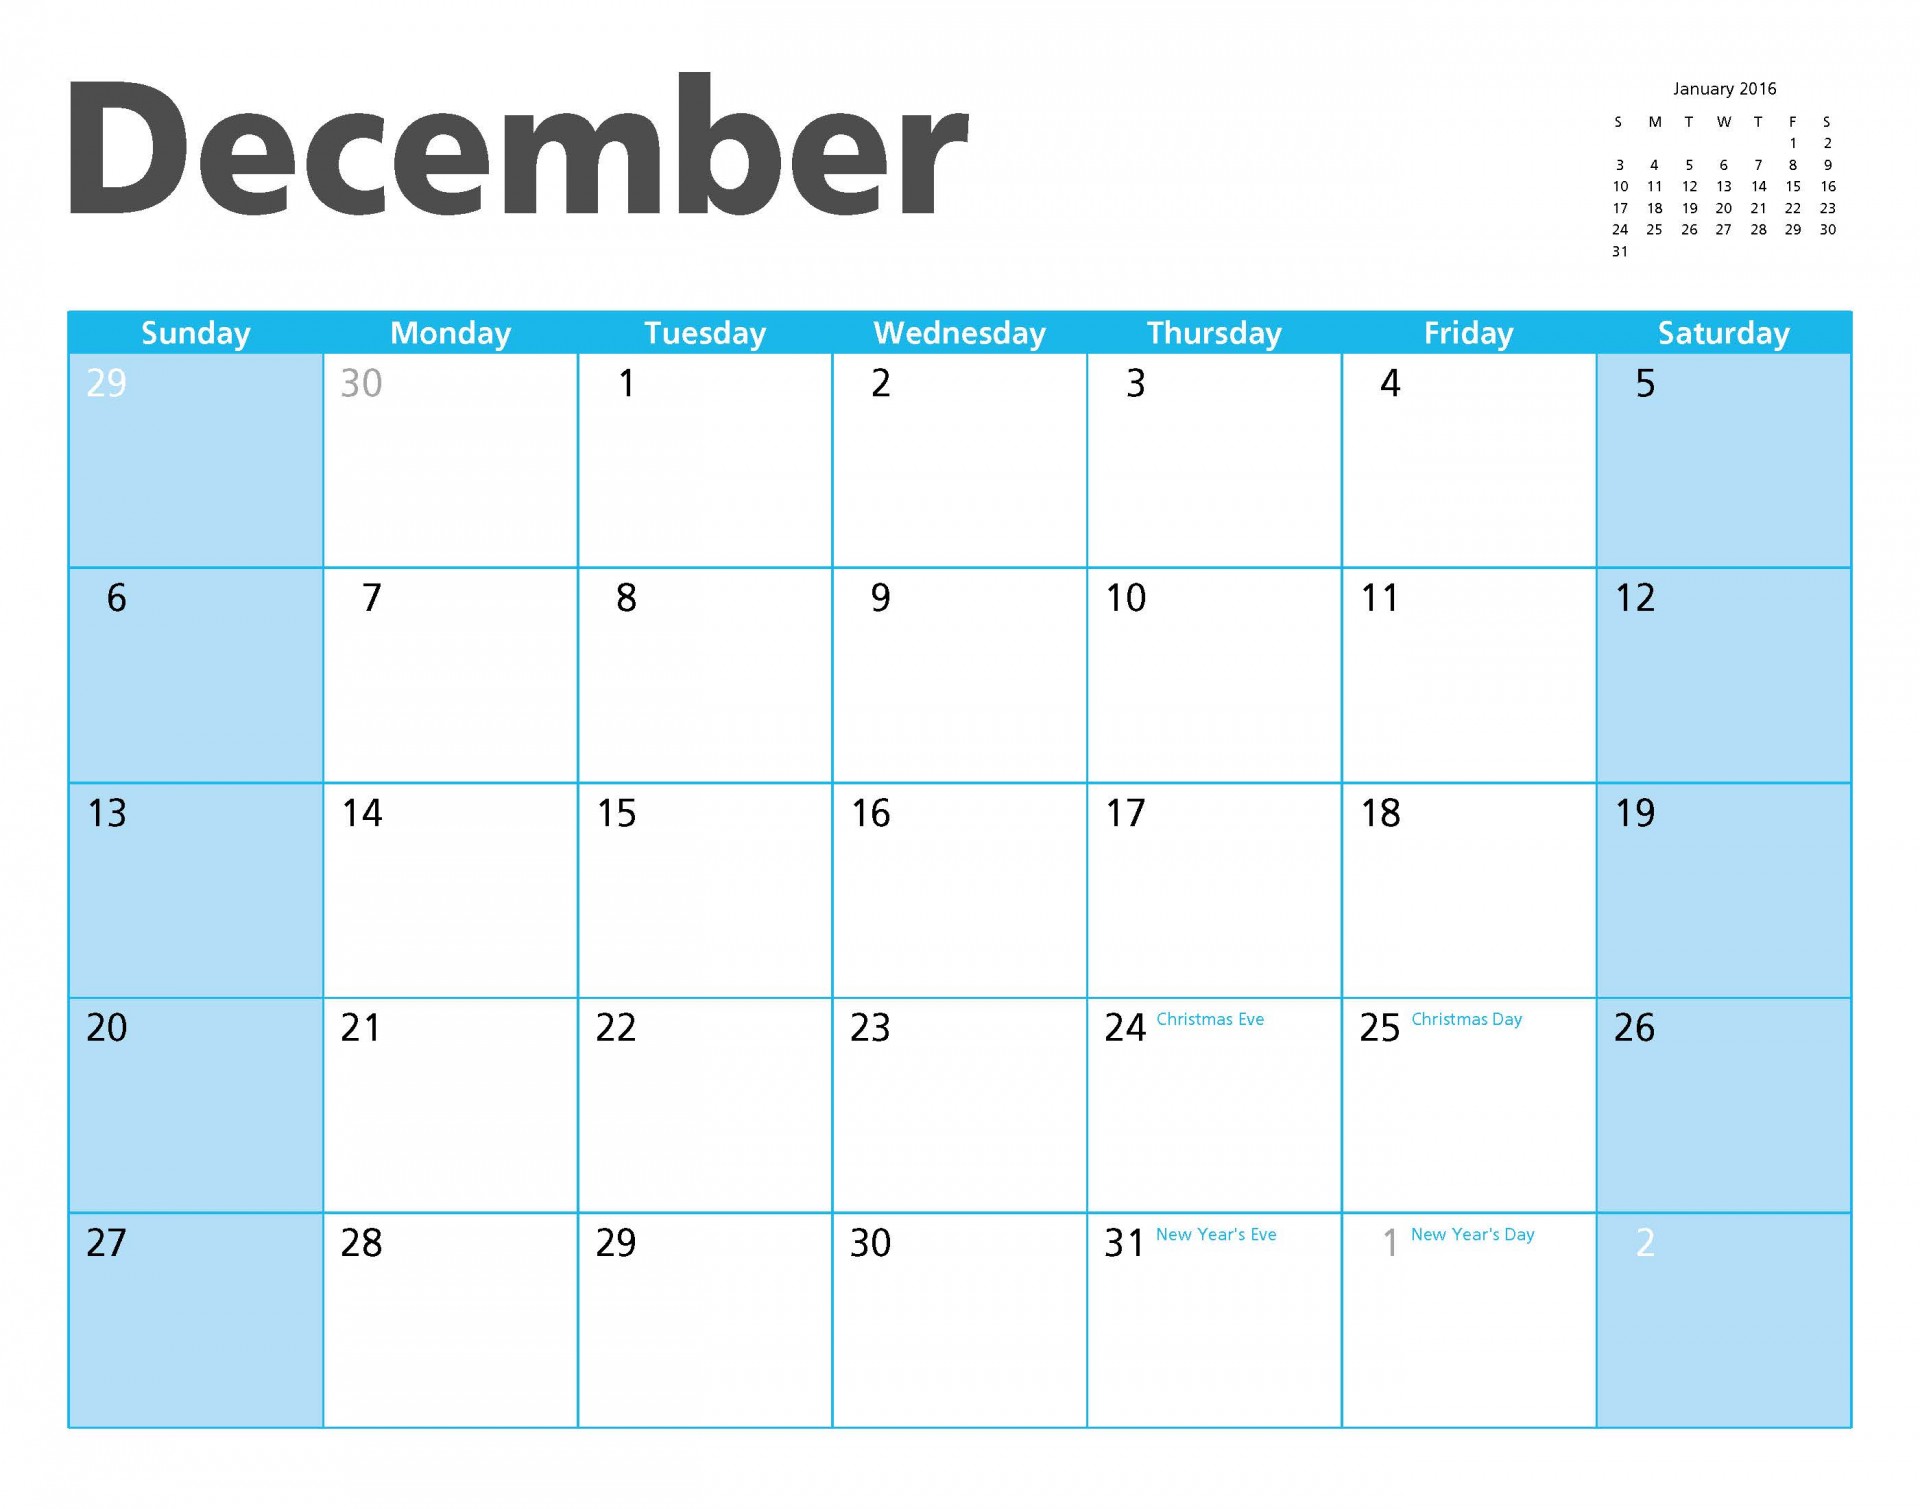 December 2015 Calendar Page